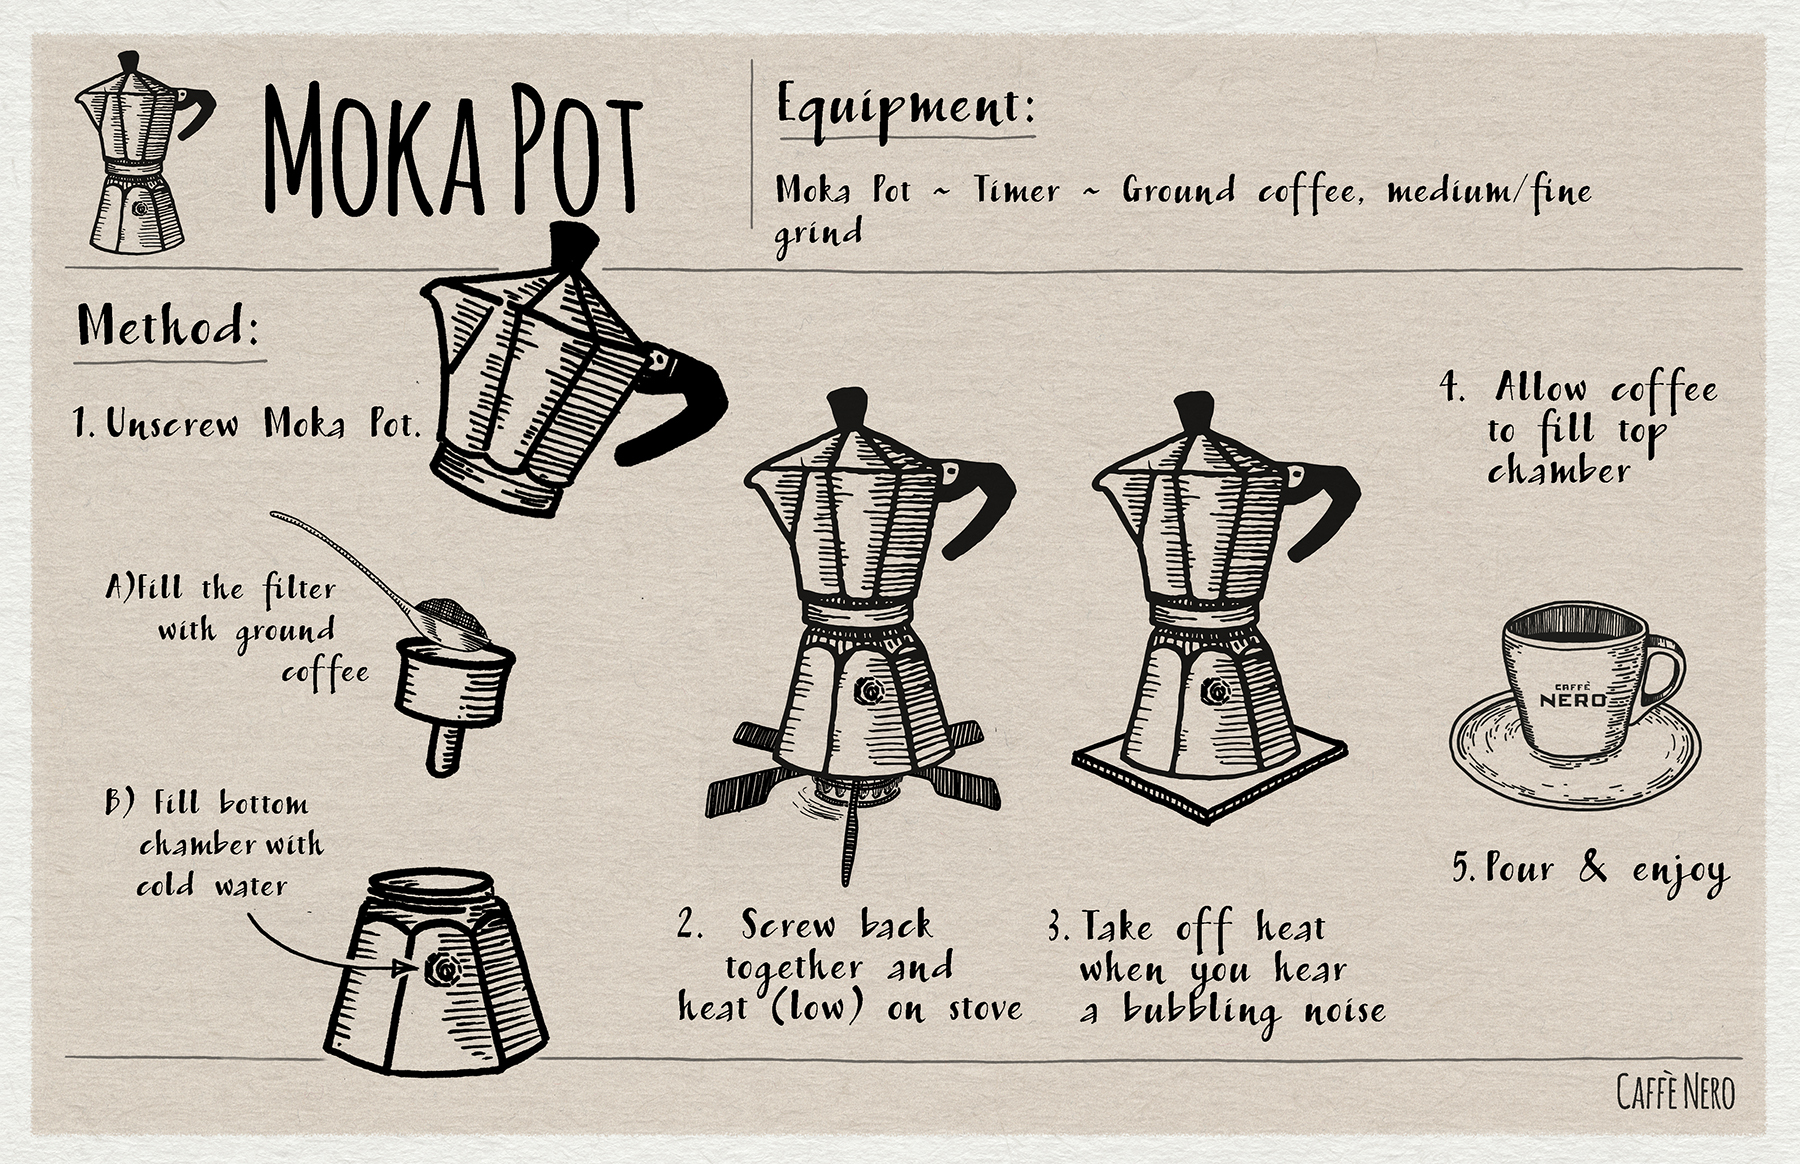 How to Make Better Moka Pot Coffee